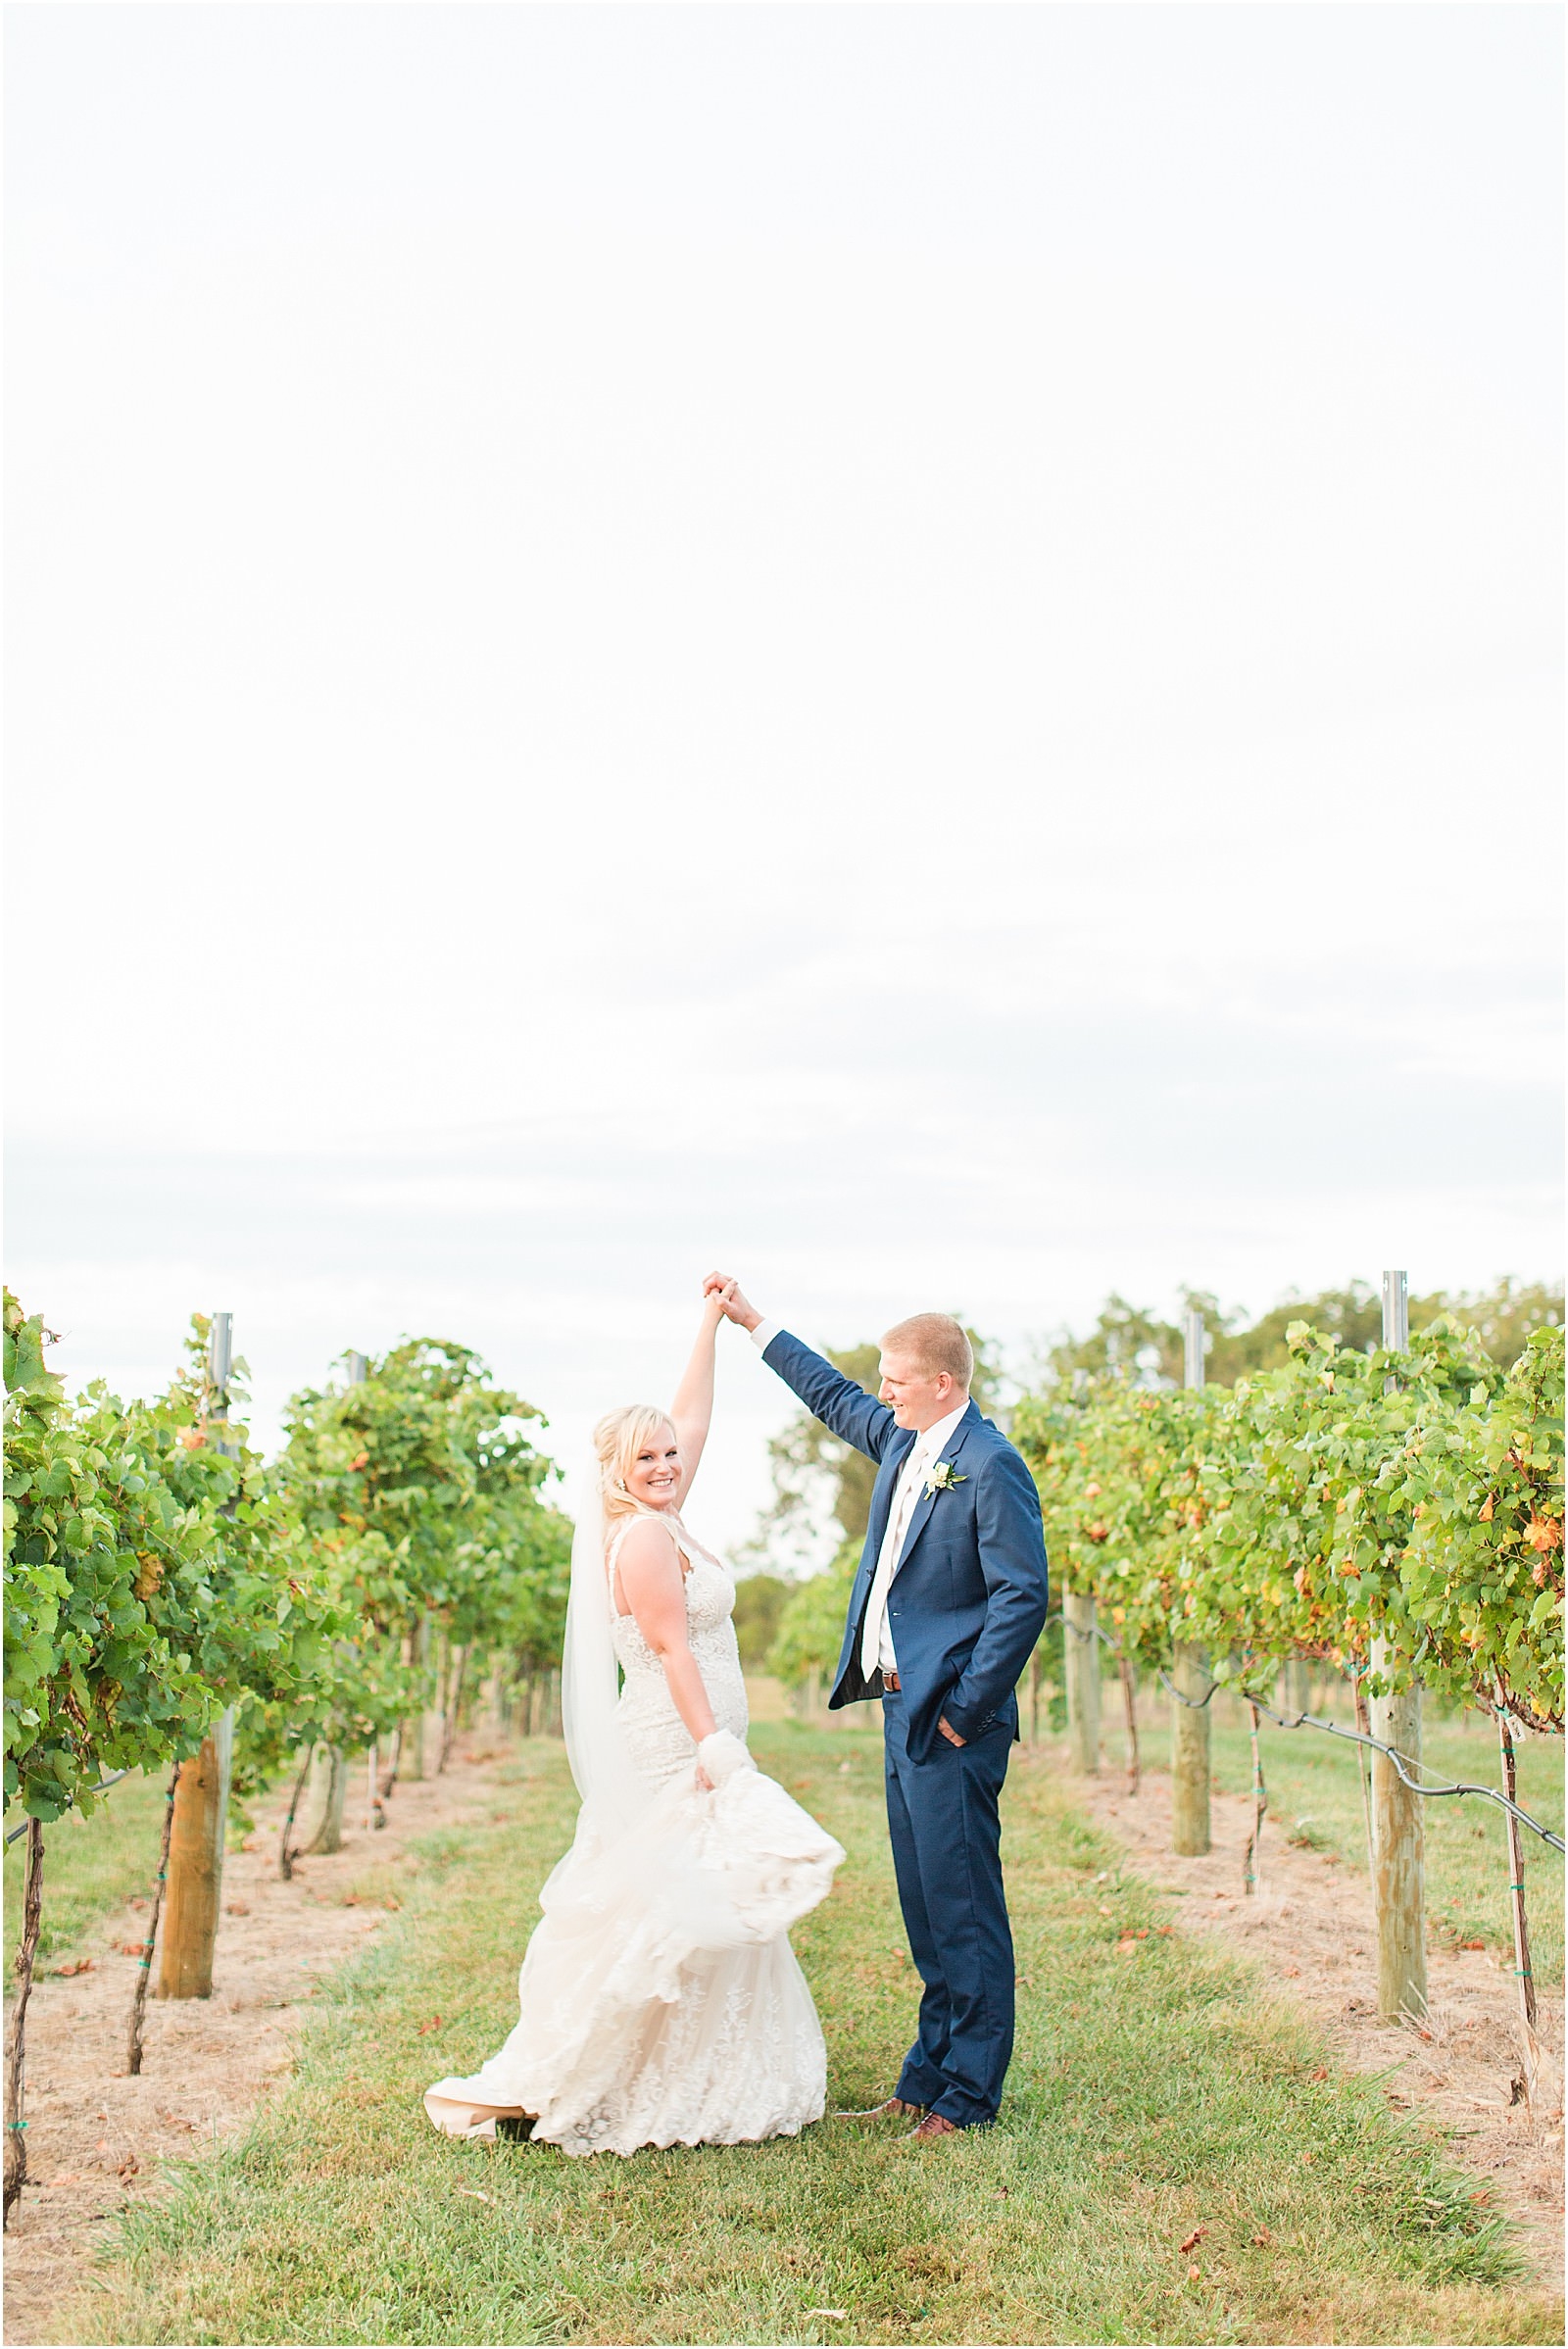 Kelsey and Caleb | Walkers Bluff Winery Wedding | Bret and Brandie Photography103.jpg